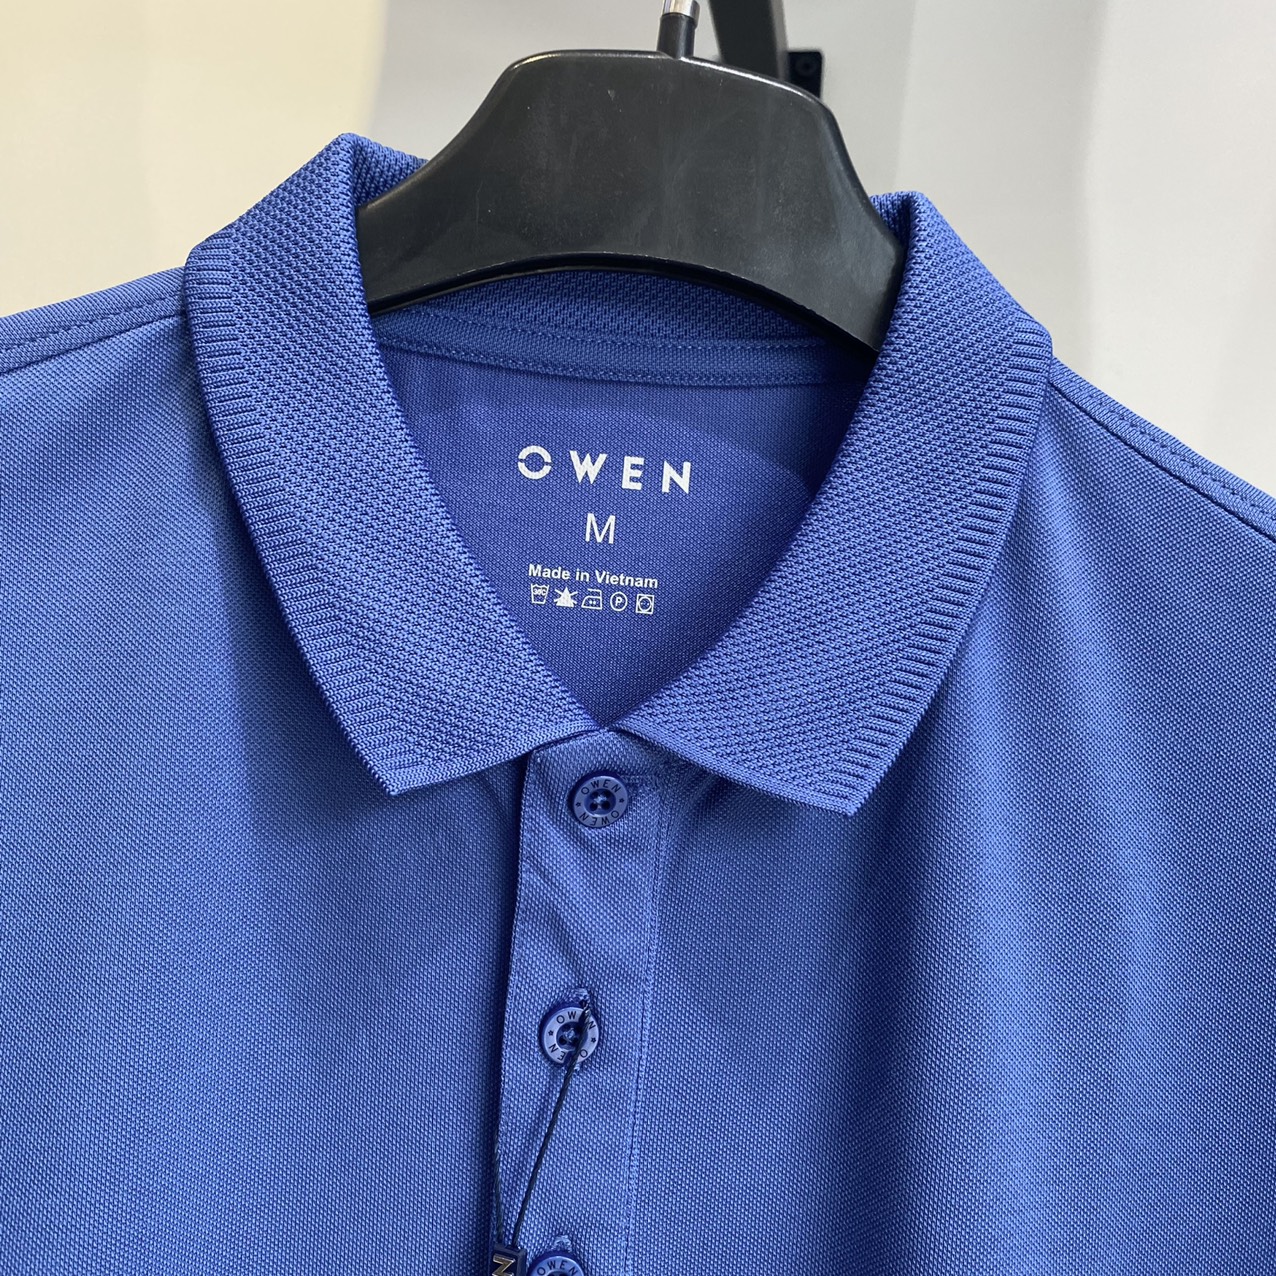 OWEN - Áo polo ngắn tay Owen chất cotton mềm mát - chống bai xù